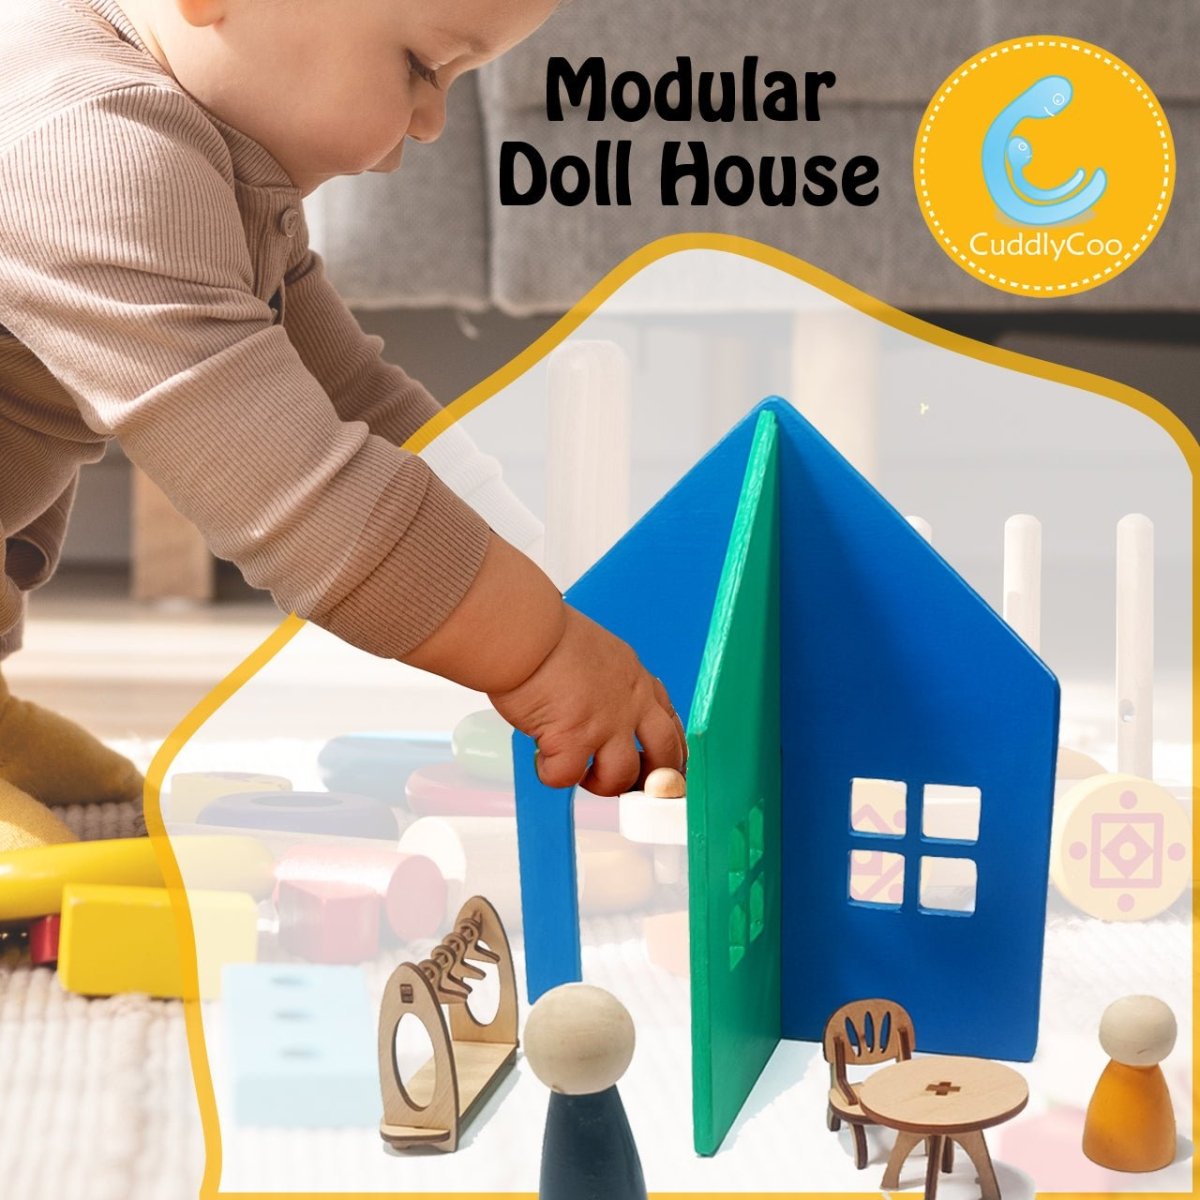 CuddlyCoo Modular Wooden Doll House- Small - CCMODULARSMALL